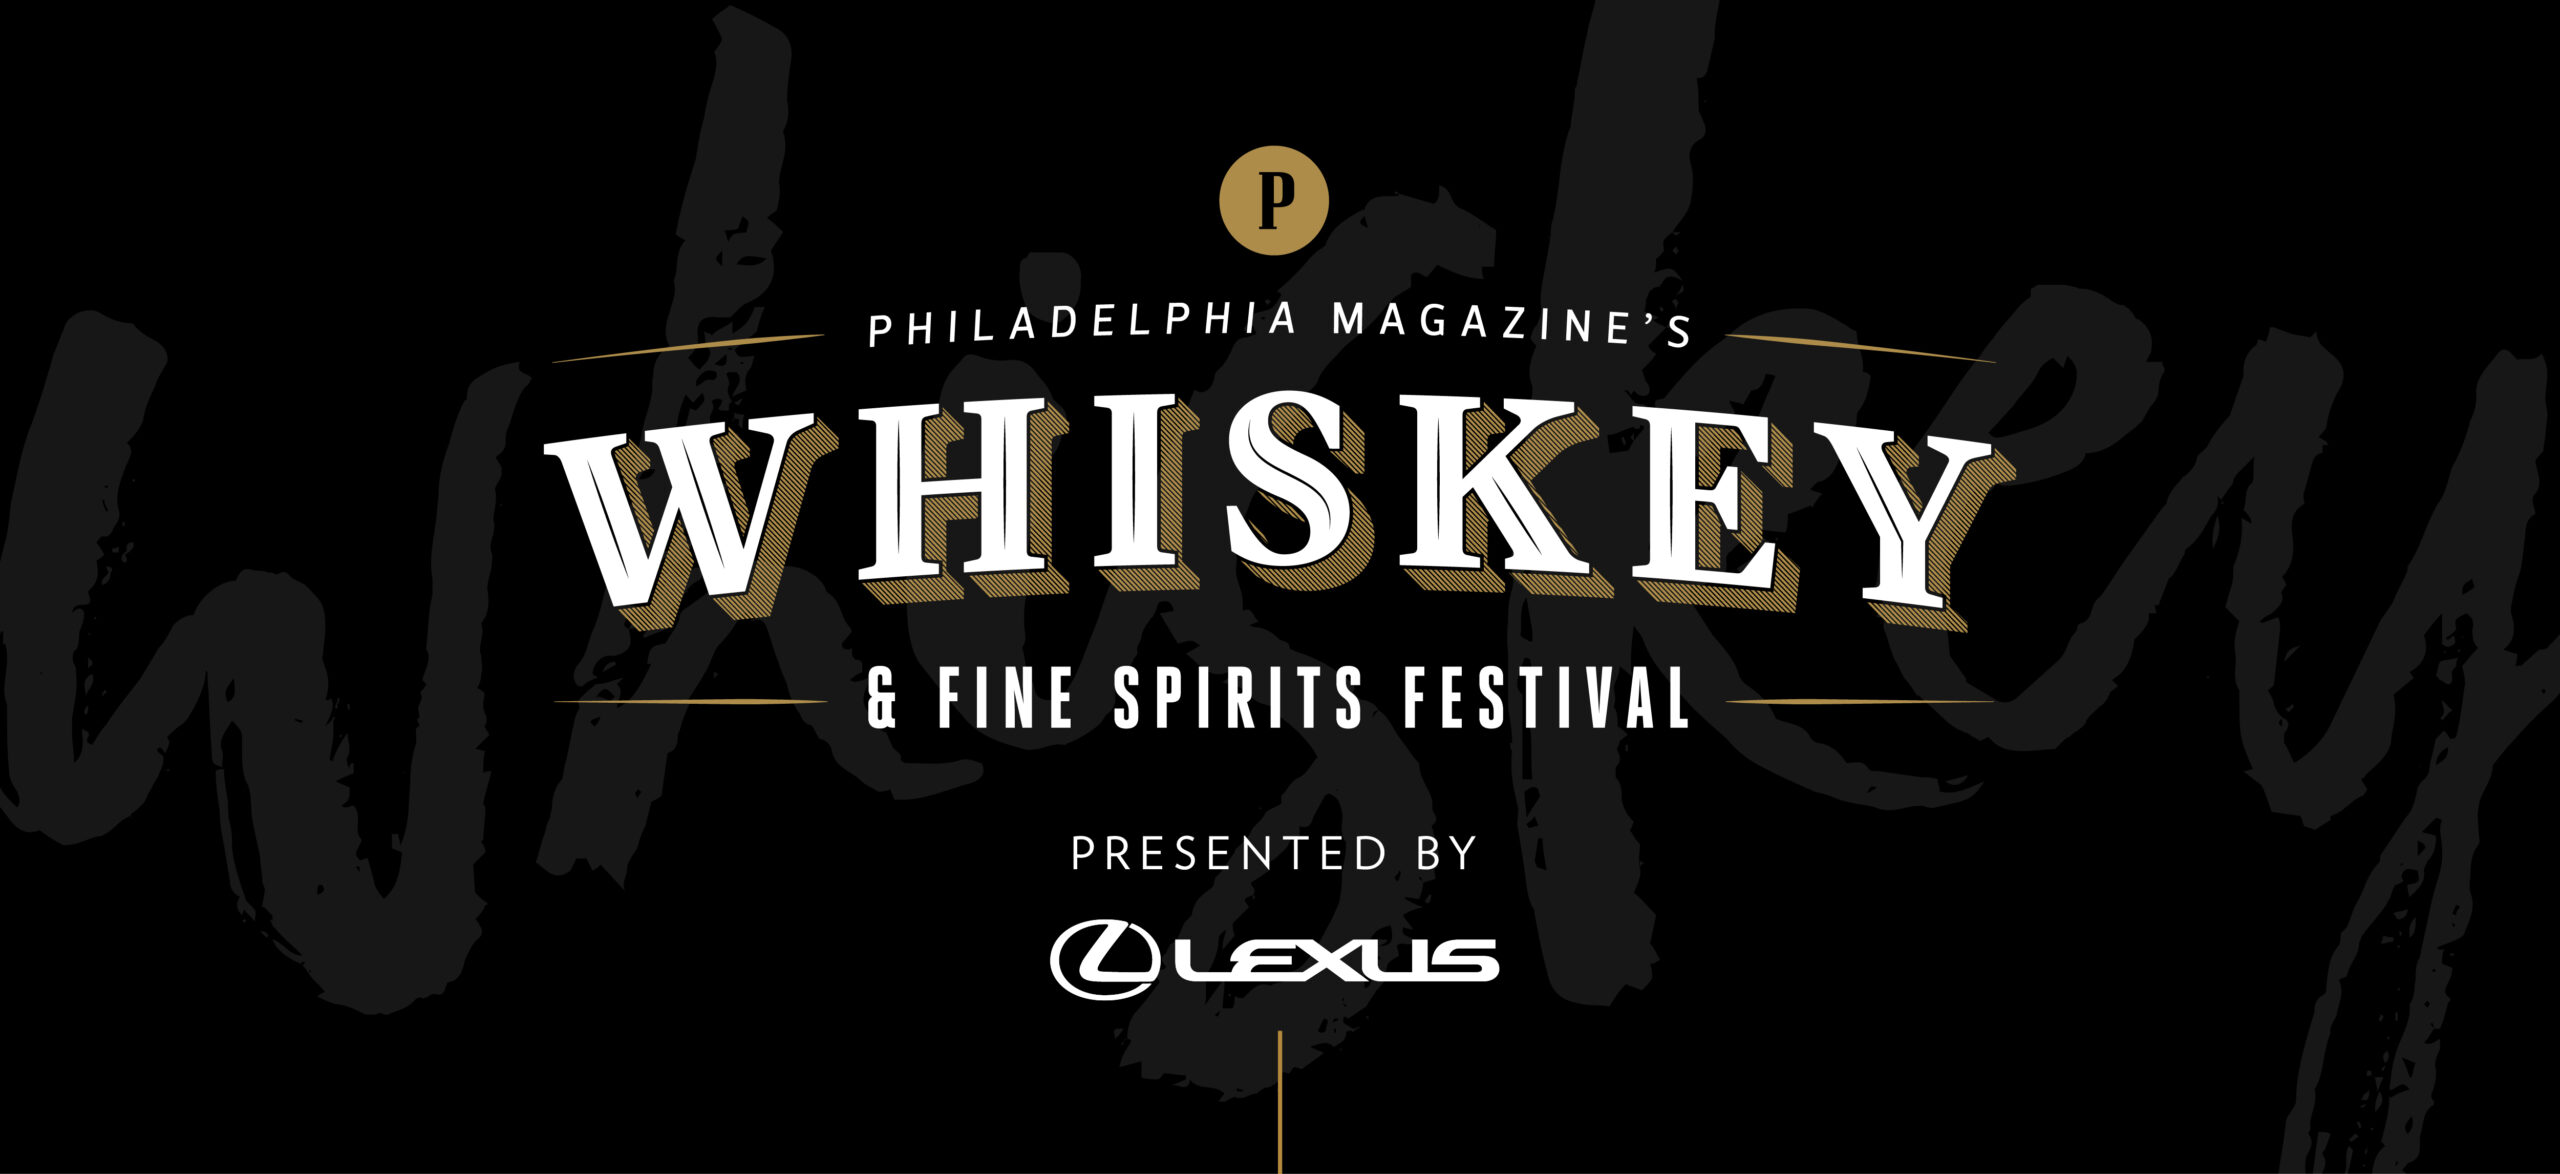 Philadelphia magazine’s Whiskey & Fine Spirits Festival